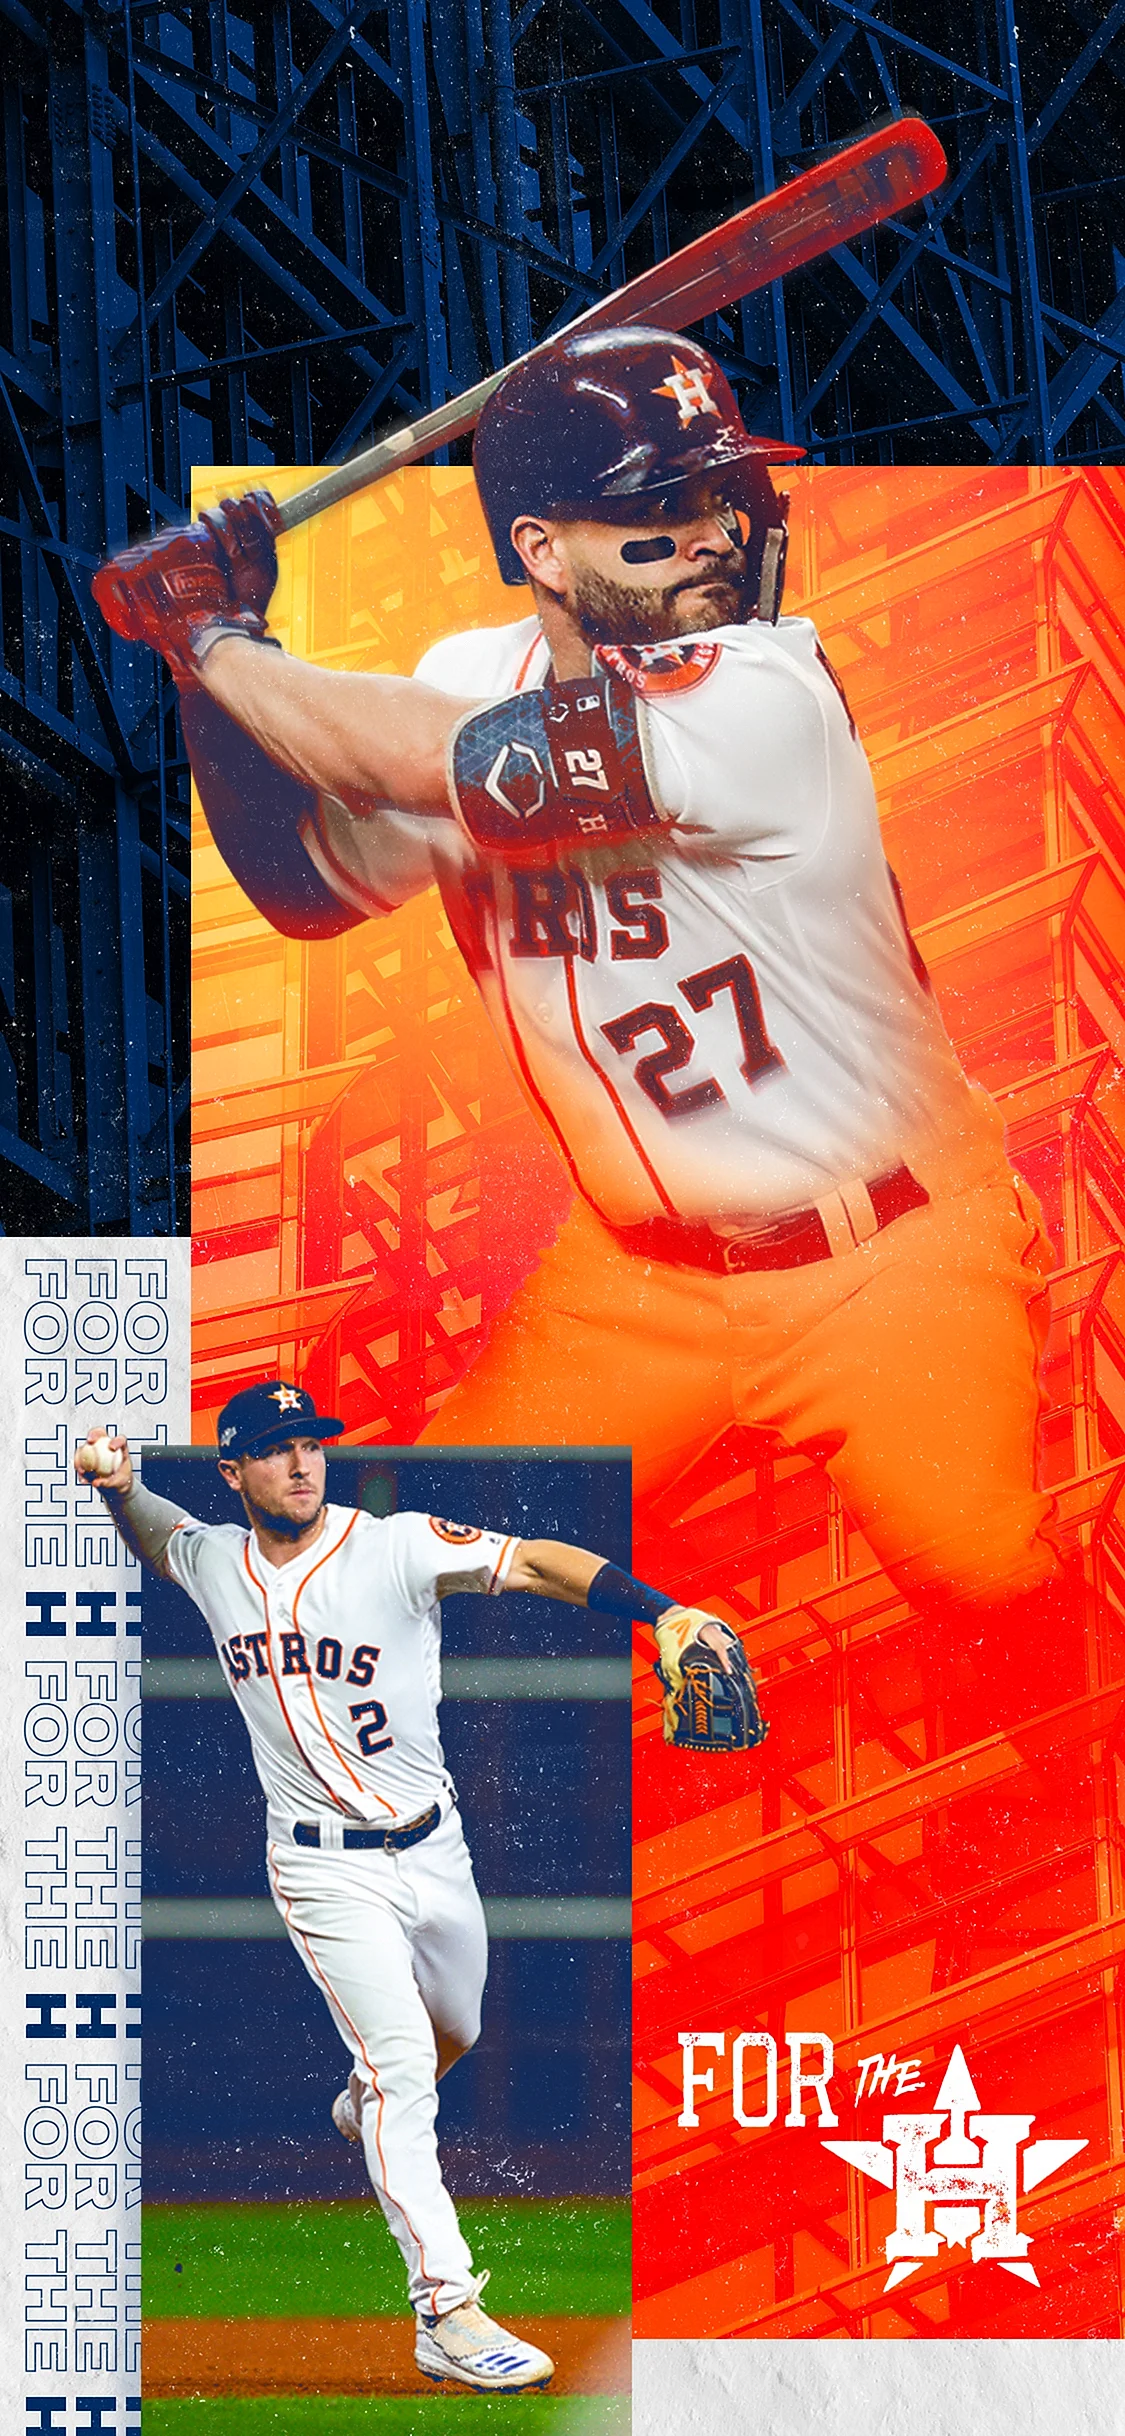 Houston Astros Wallpaper For iPhone